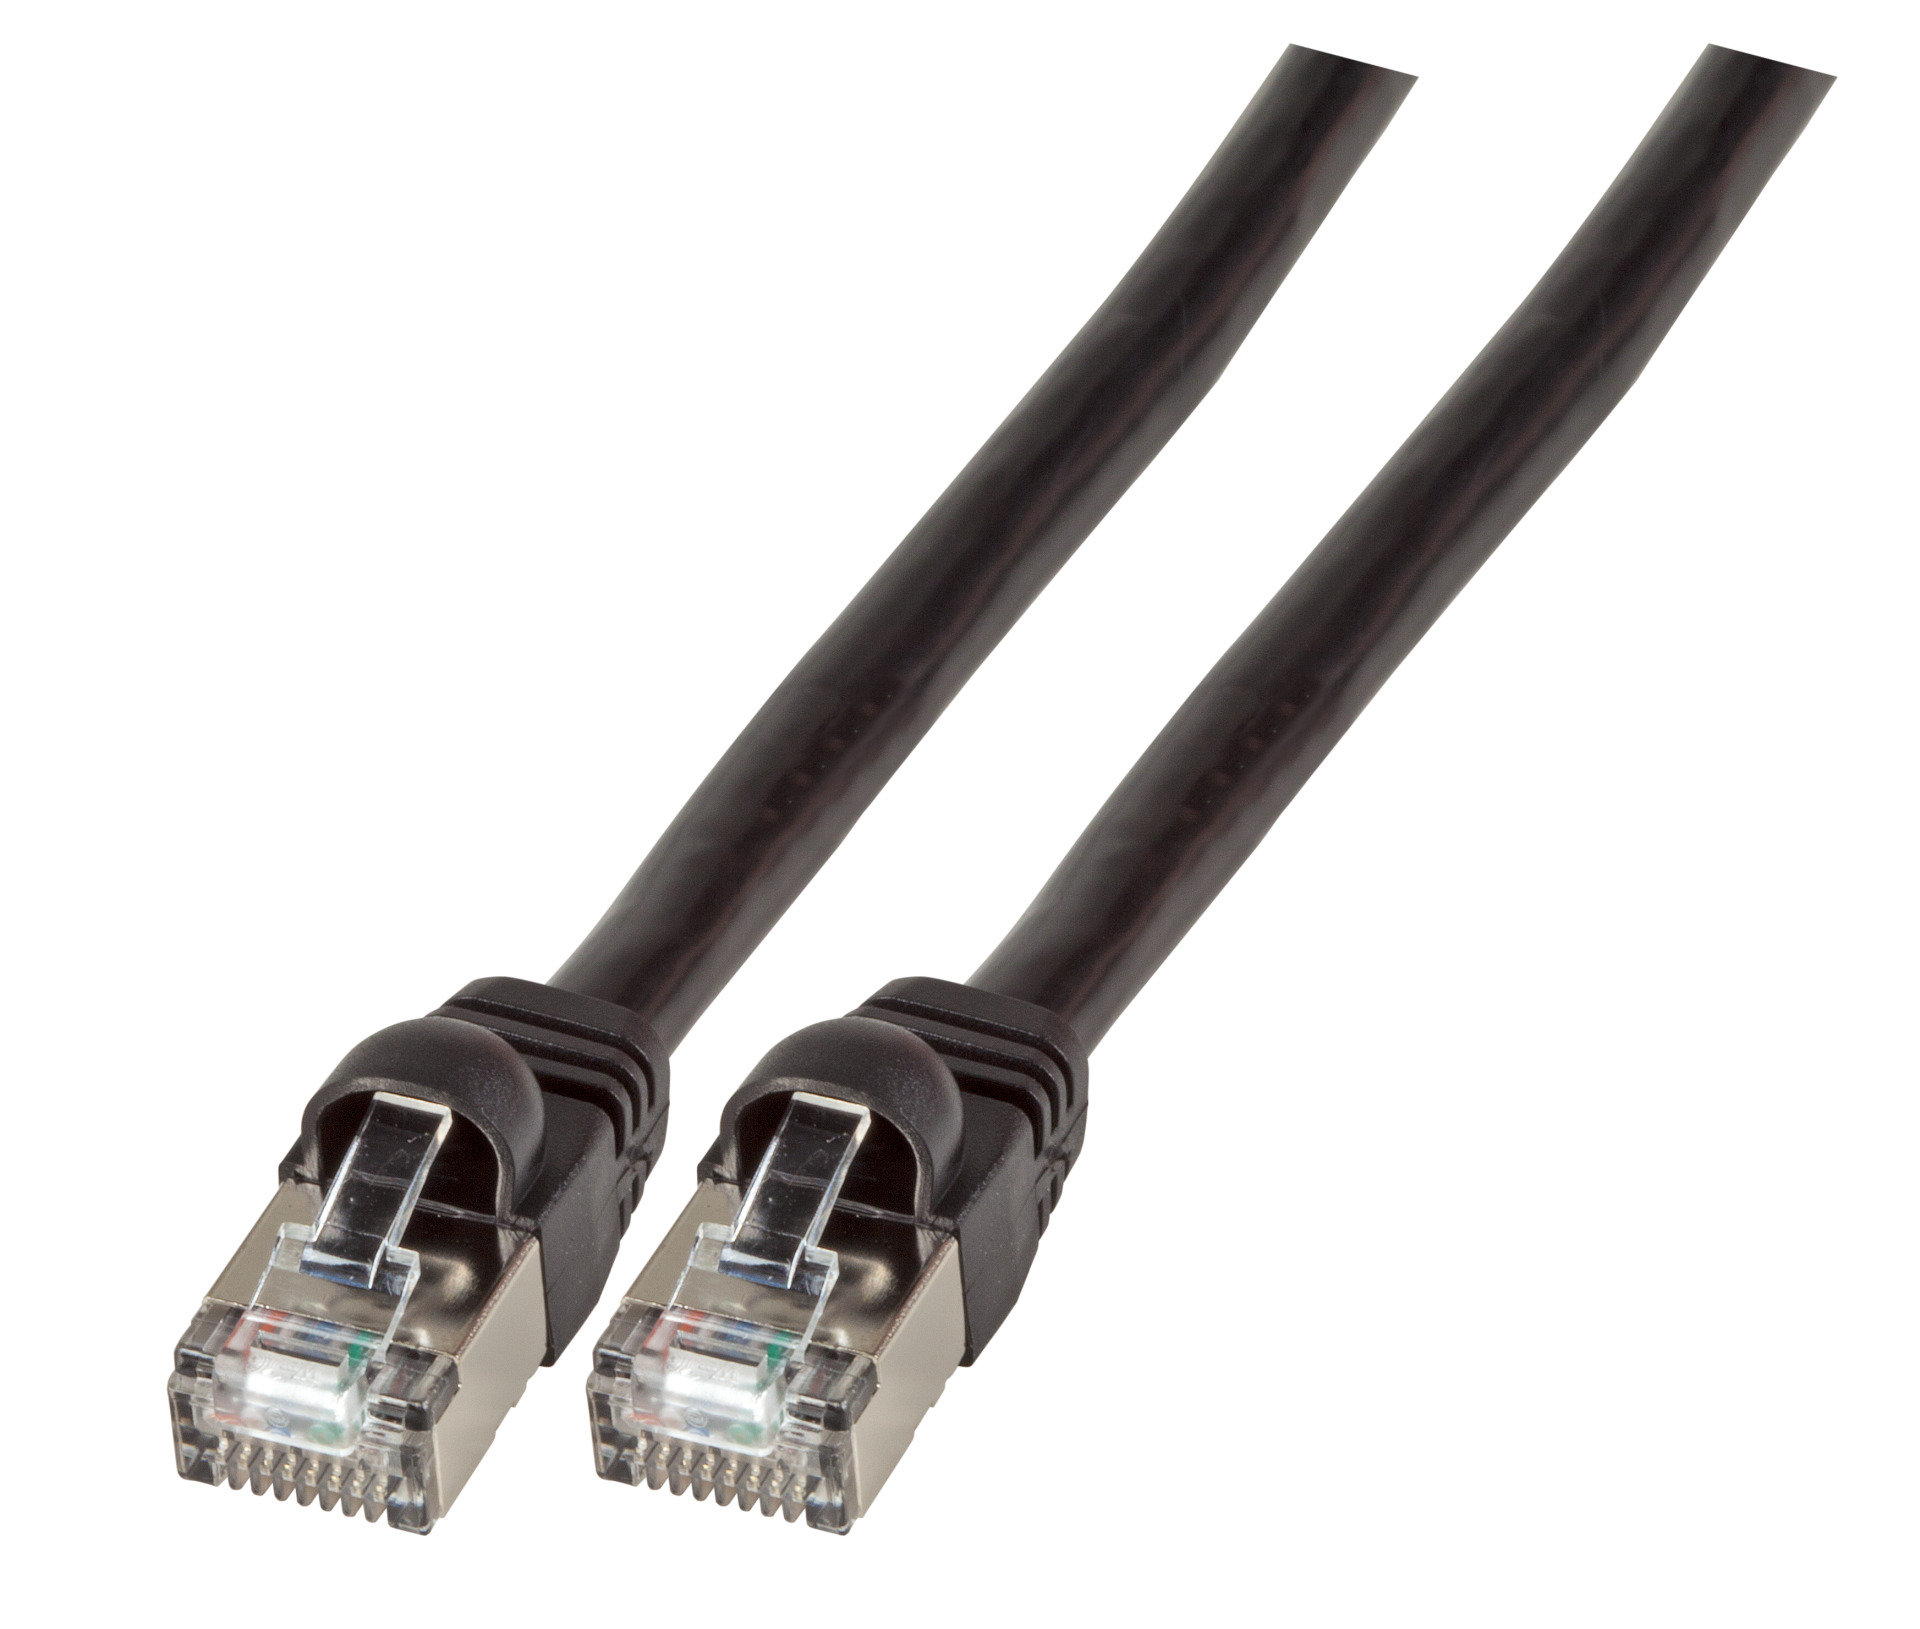 RJ45 Patch cable S/FTP, Cat.6A, VOIP, short boot, 2m, black